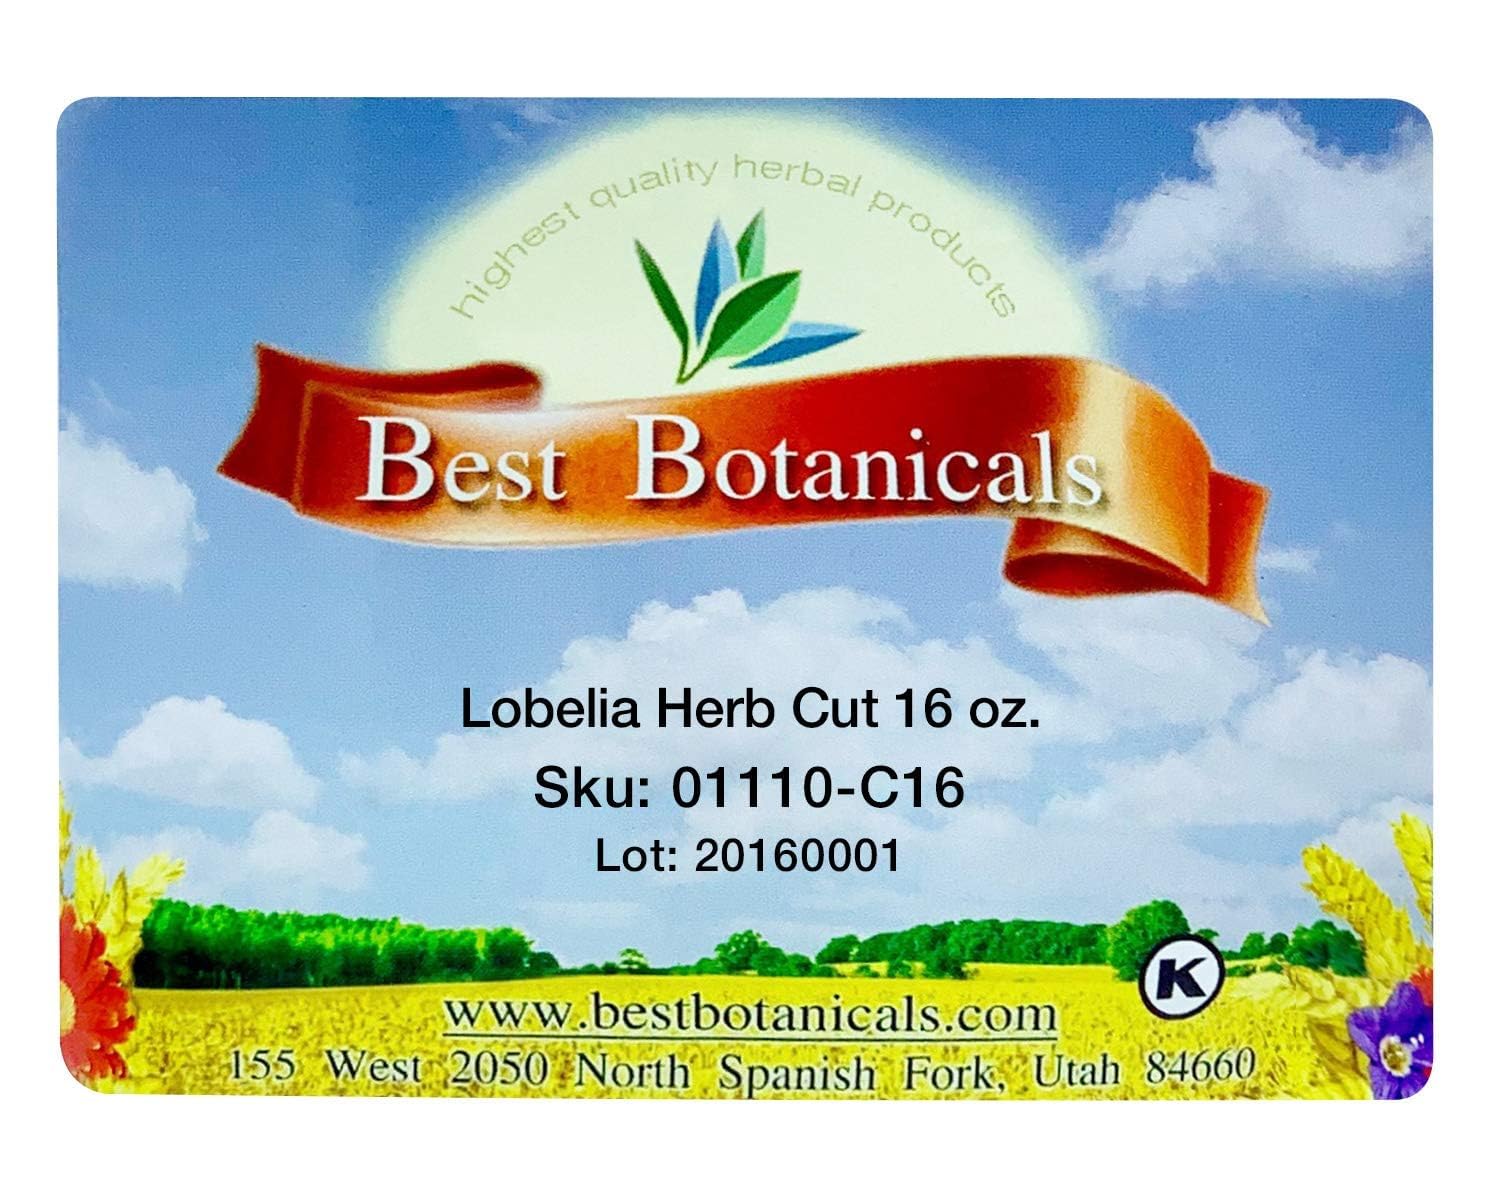 Best Botanicals Lobelia Herb Cut 16 oz.